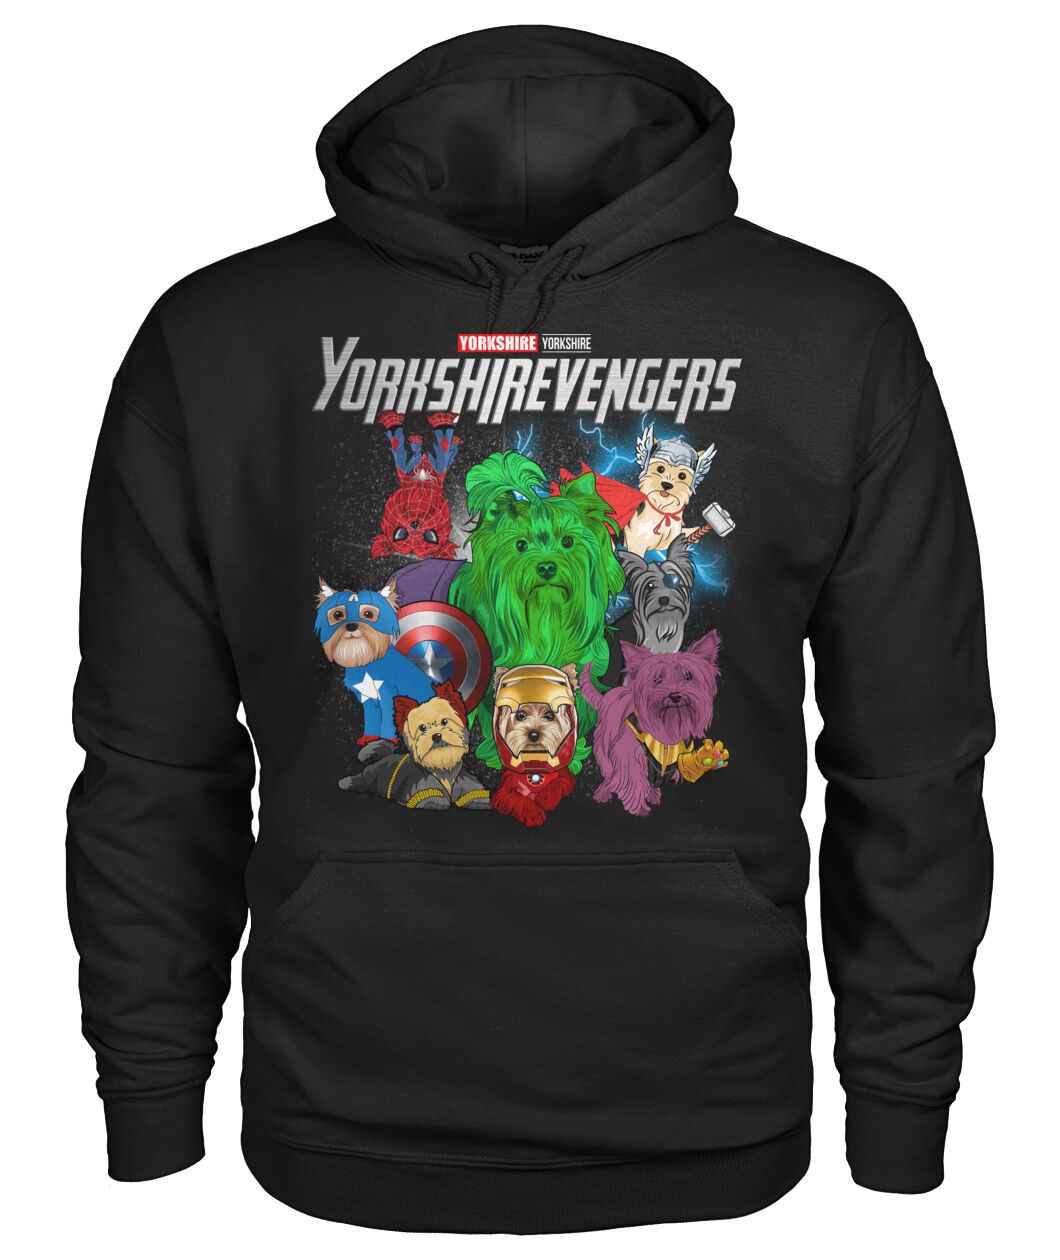 Yorkshirevengers 3D Hoodie, Shirt 9